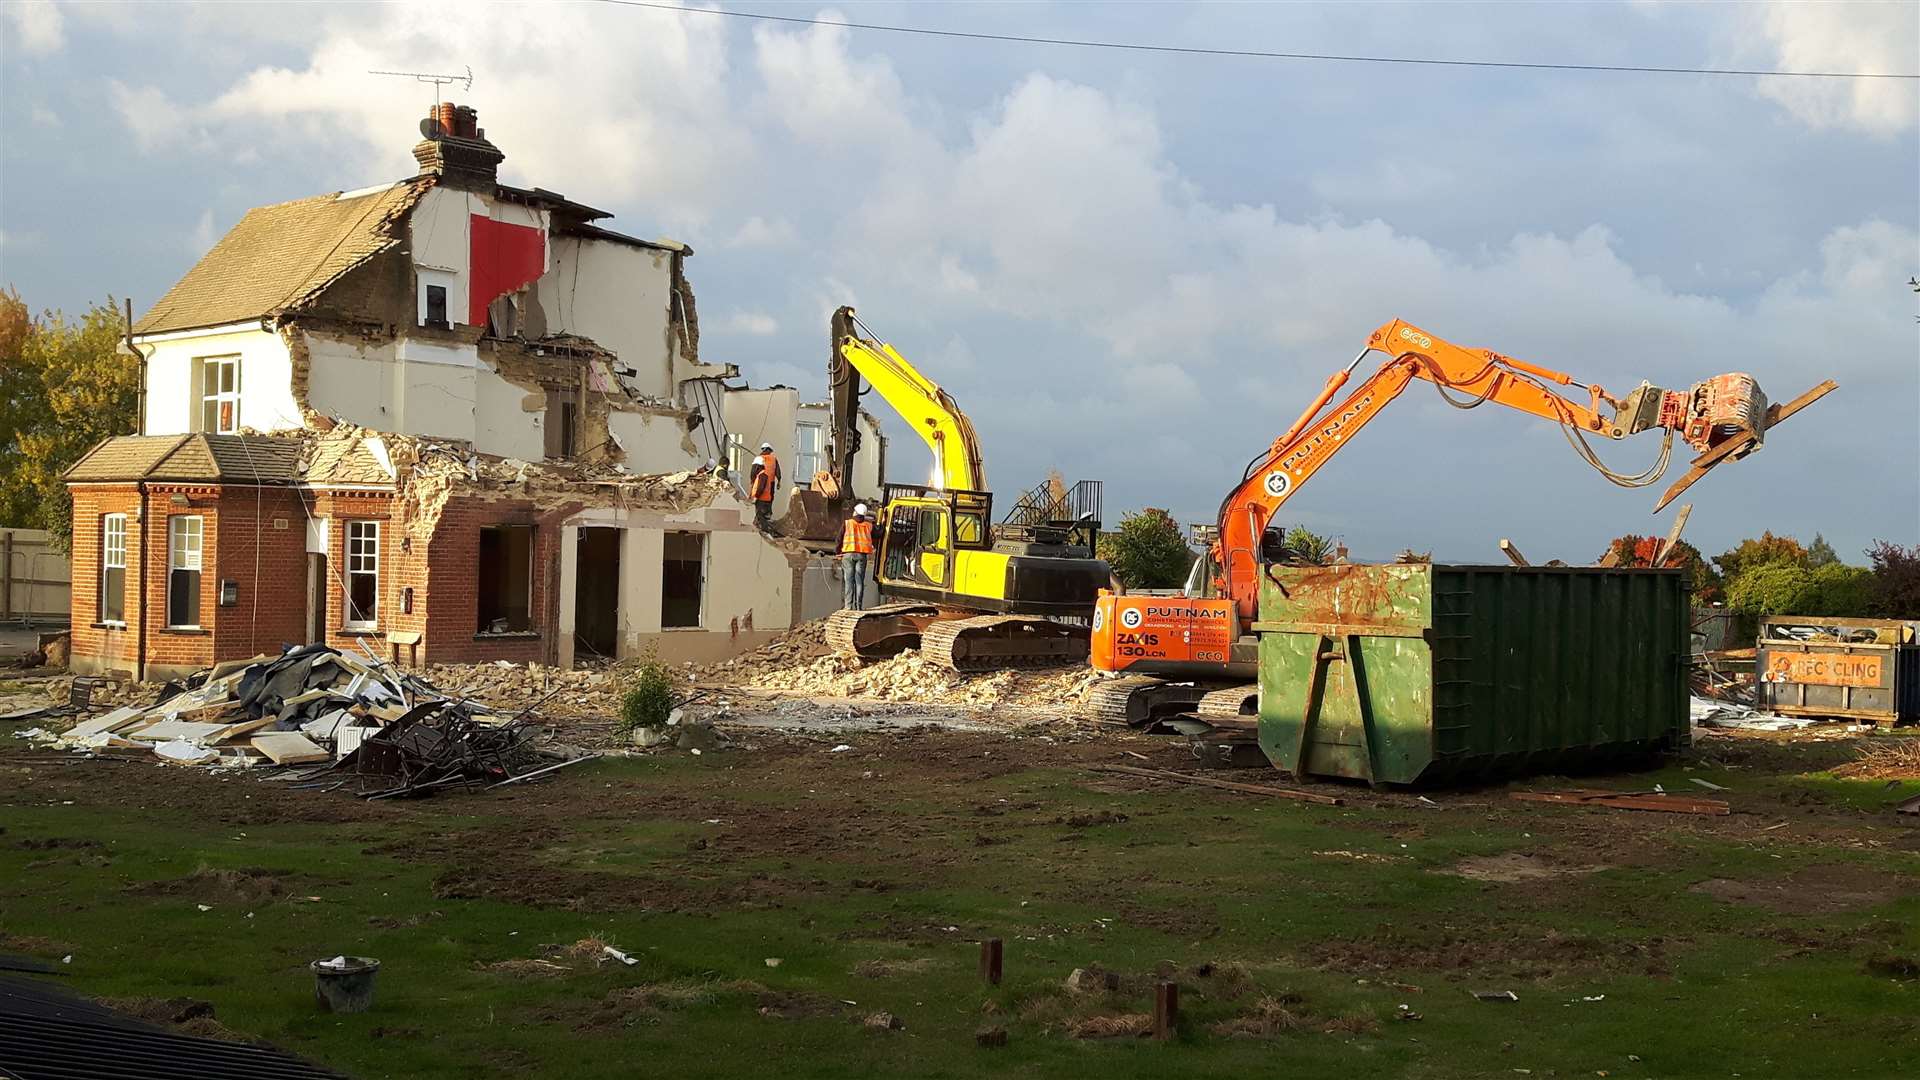 Battle of Britain pub was demolished without permission